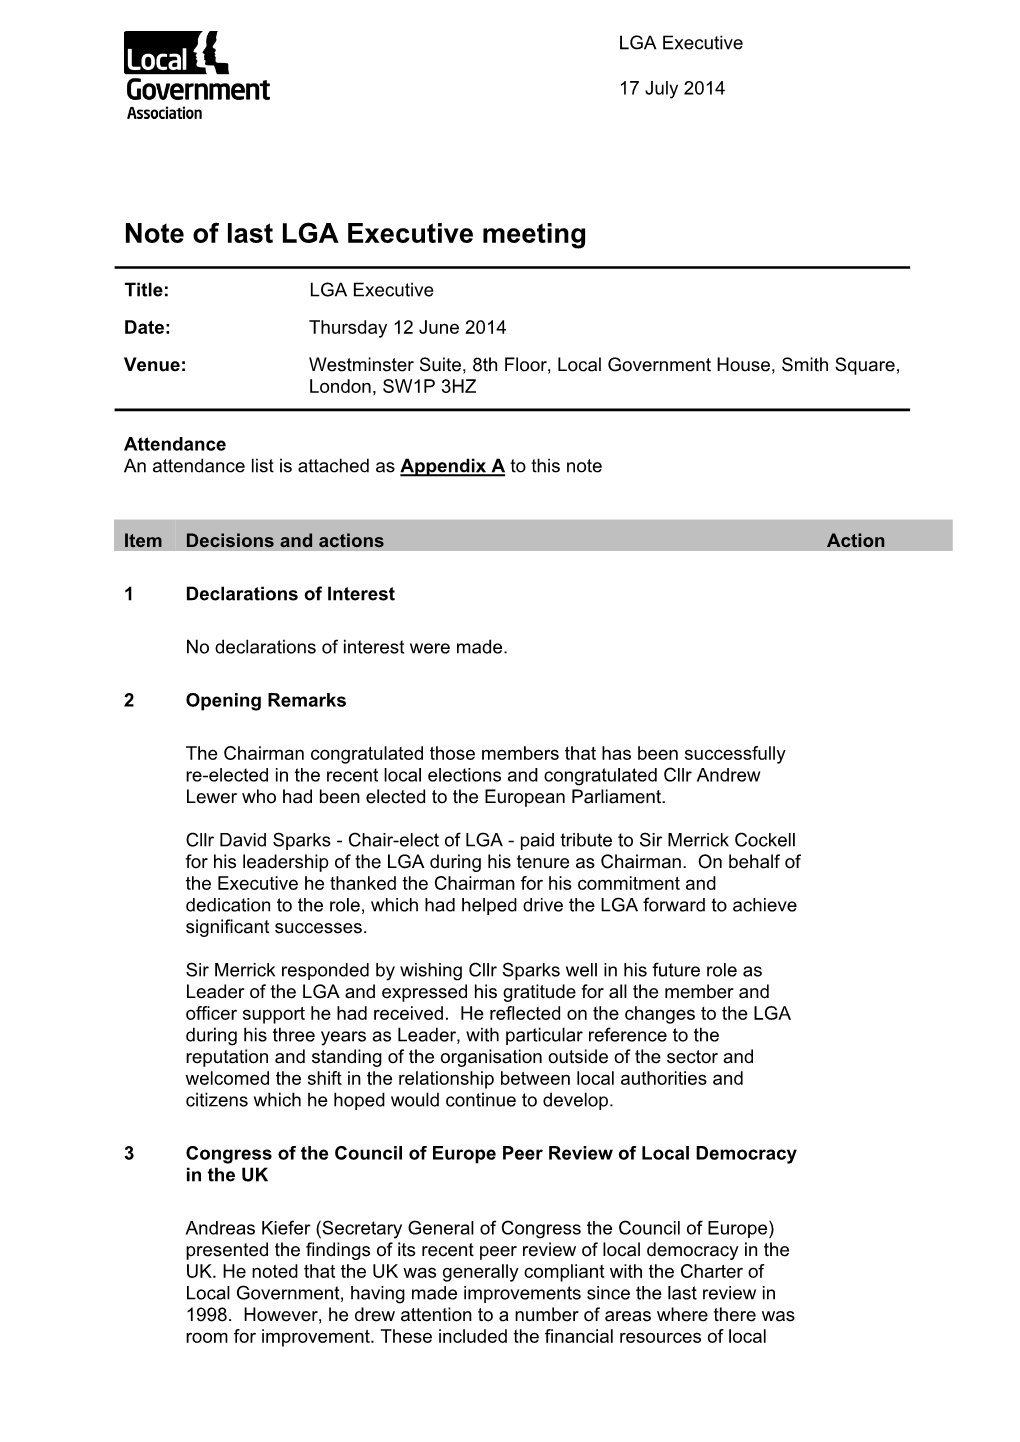 Note of Last LGA Executive Meeting